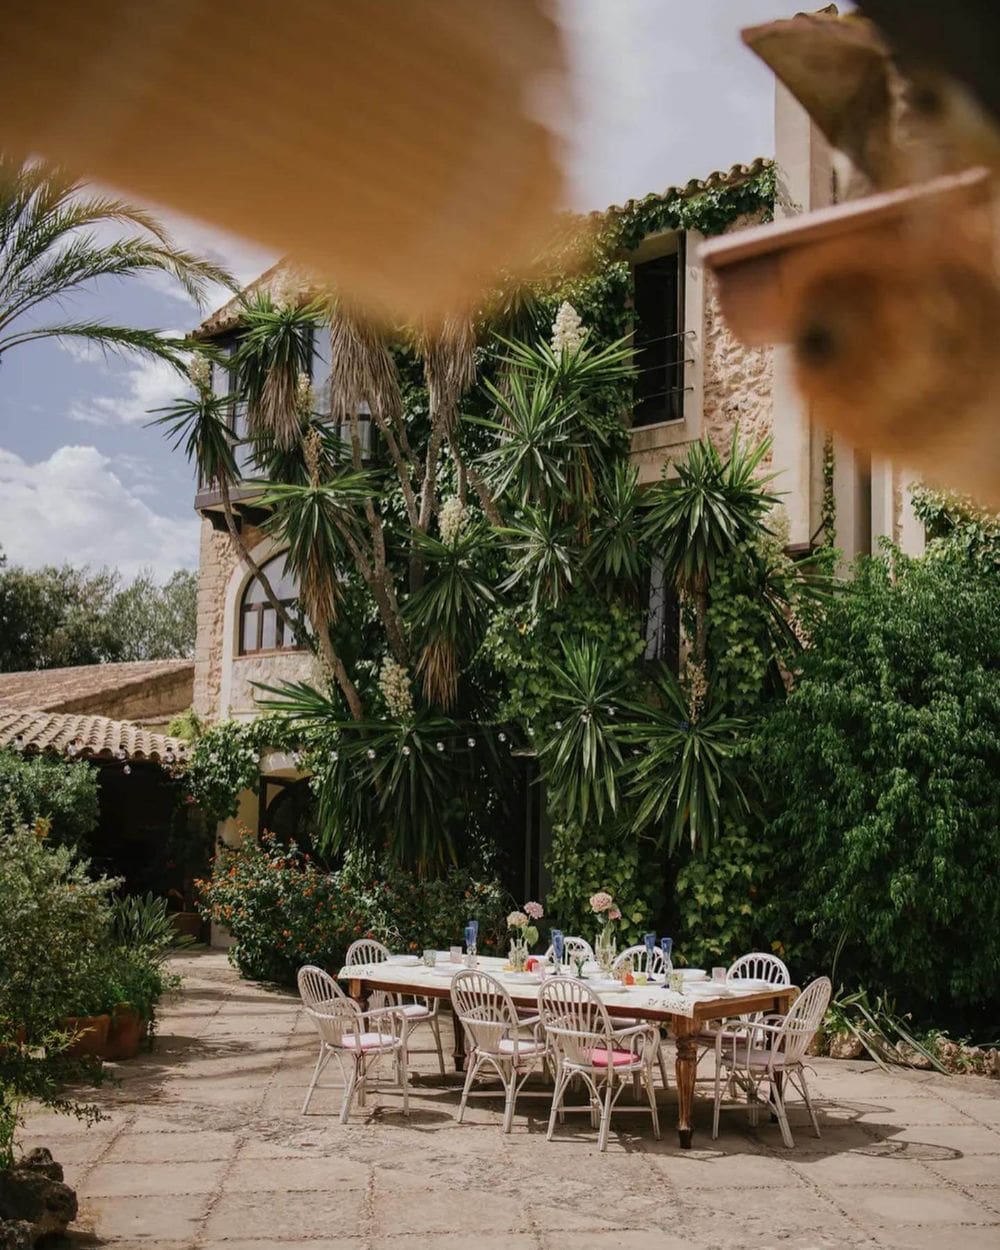 The palm-flanked dinner setting at Casa Balandra in Mallorca